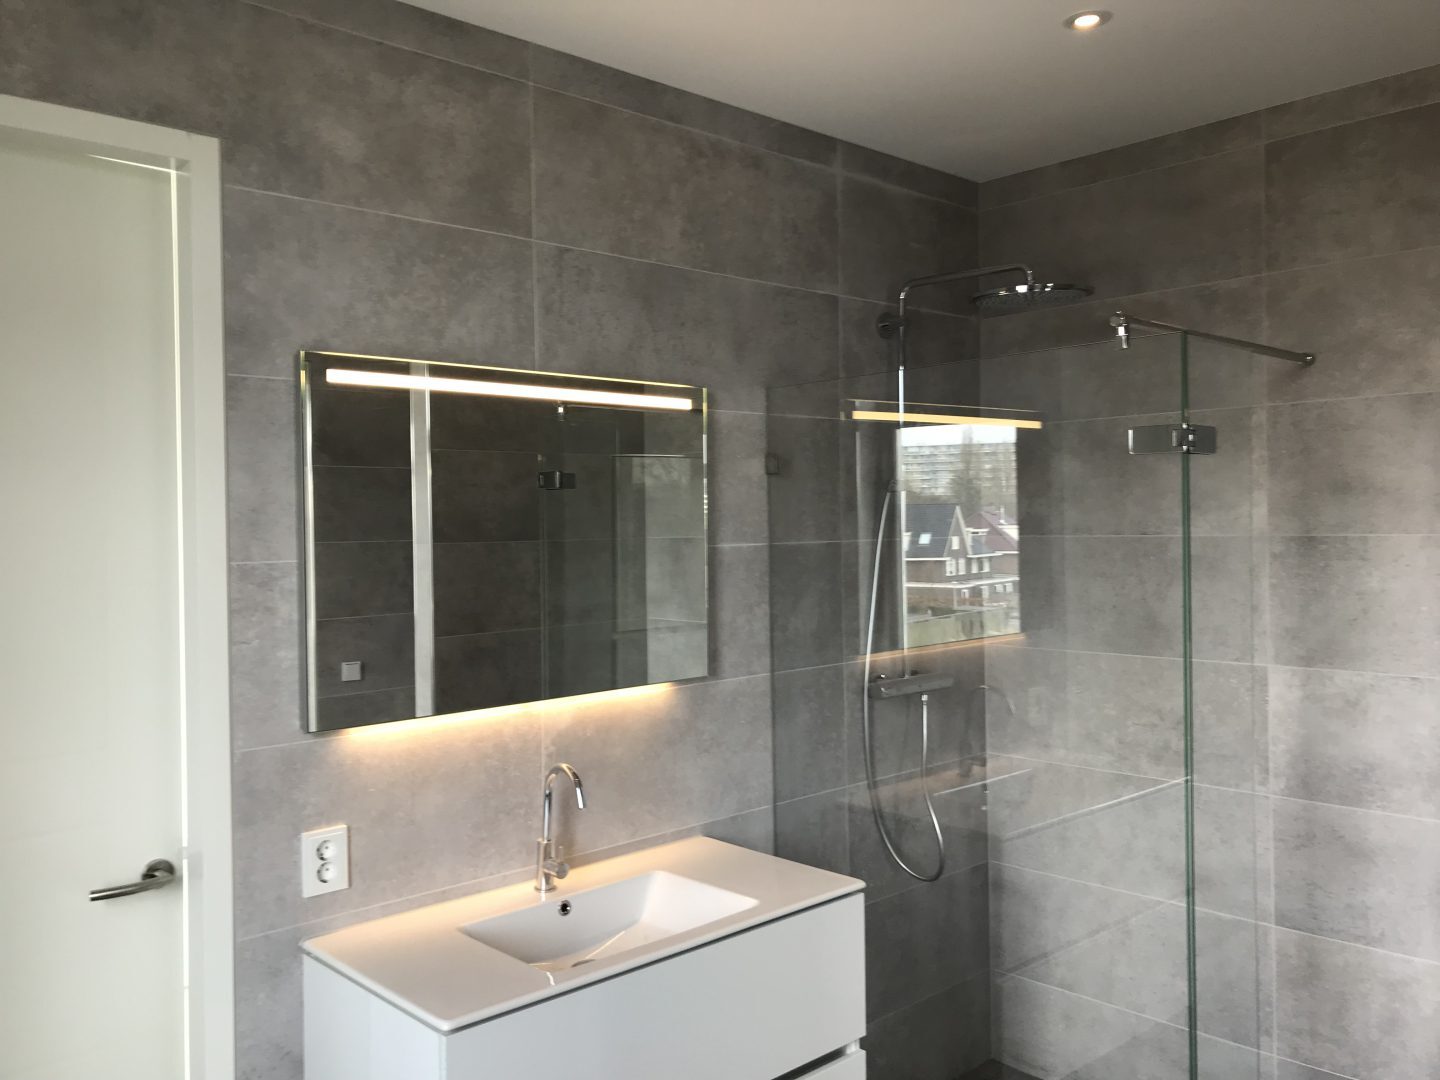 Impressie van badkamer met spanplafond met verlichting